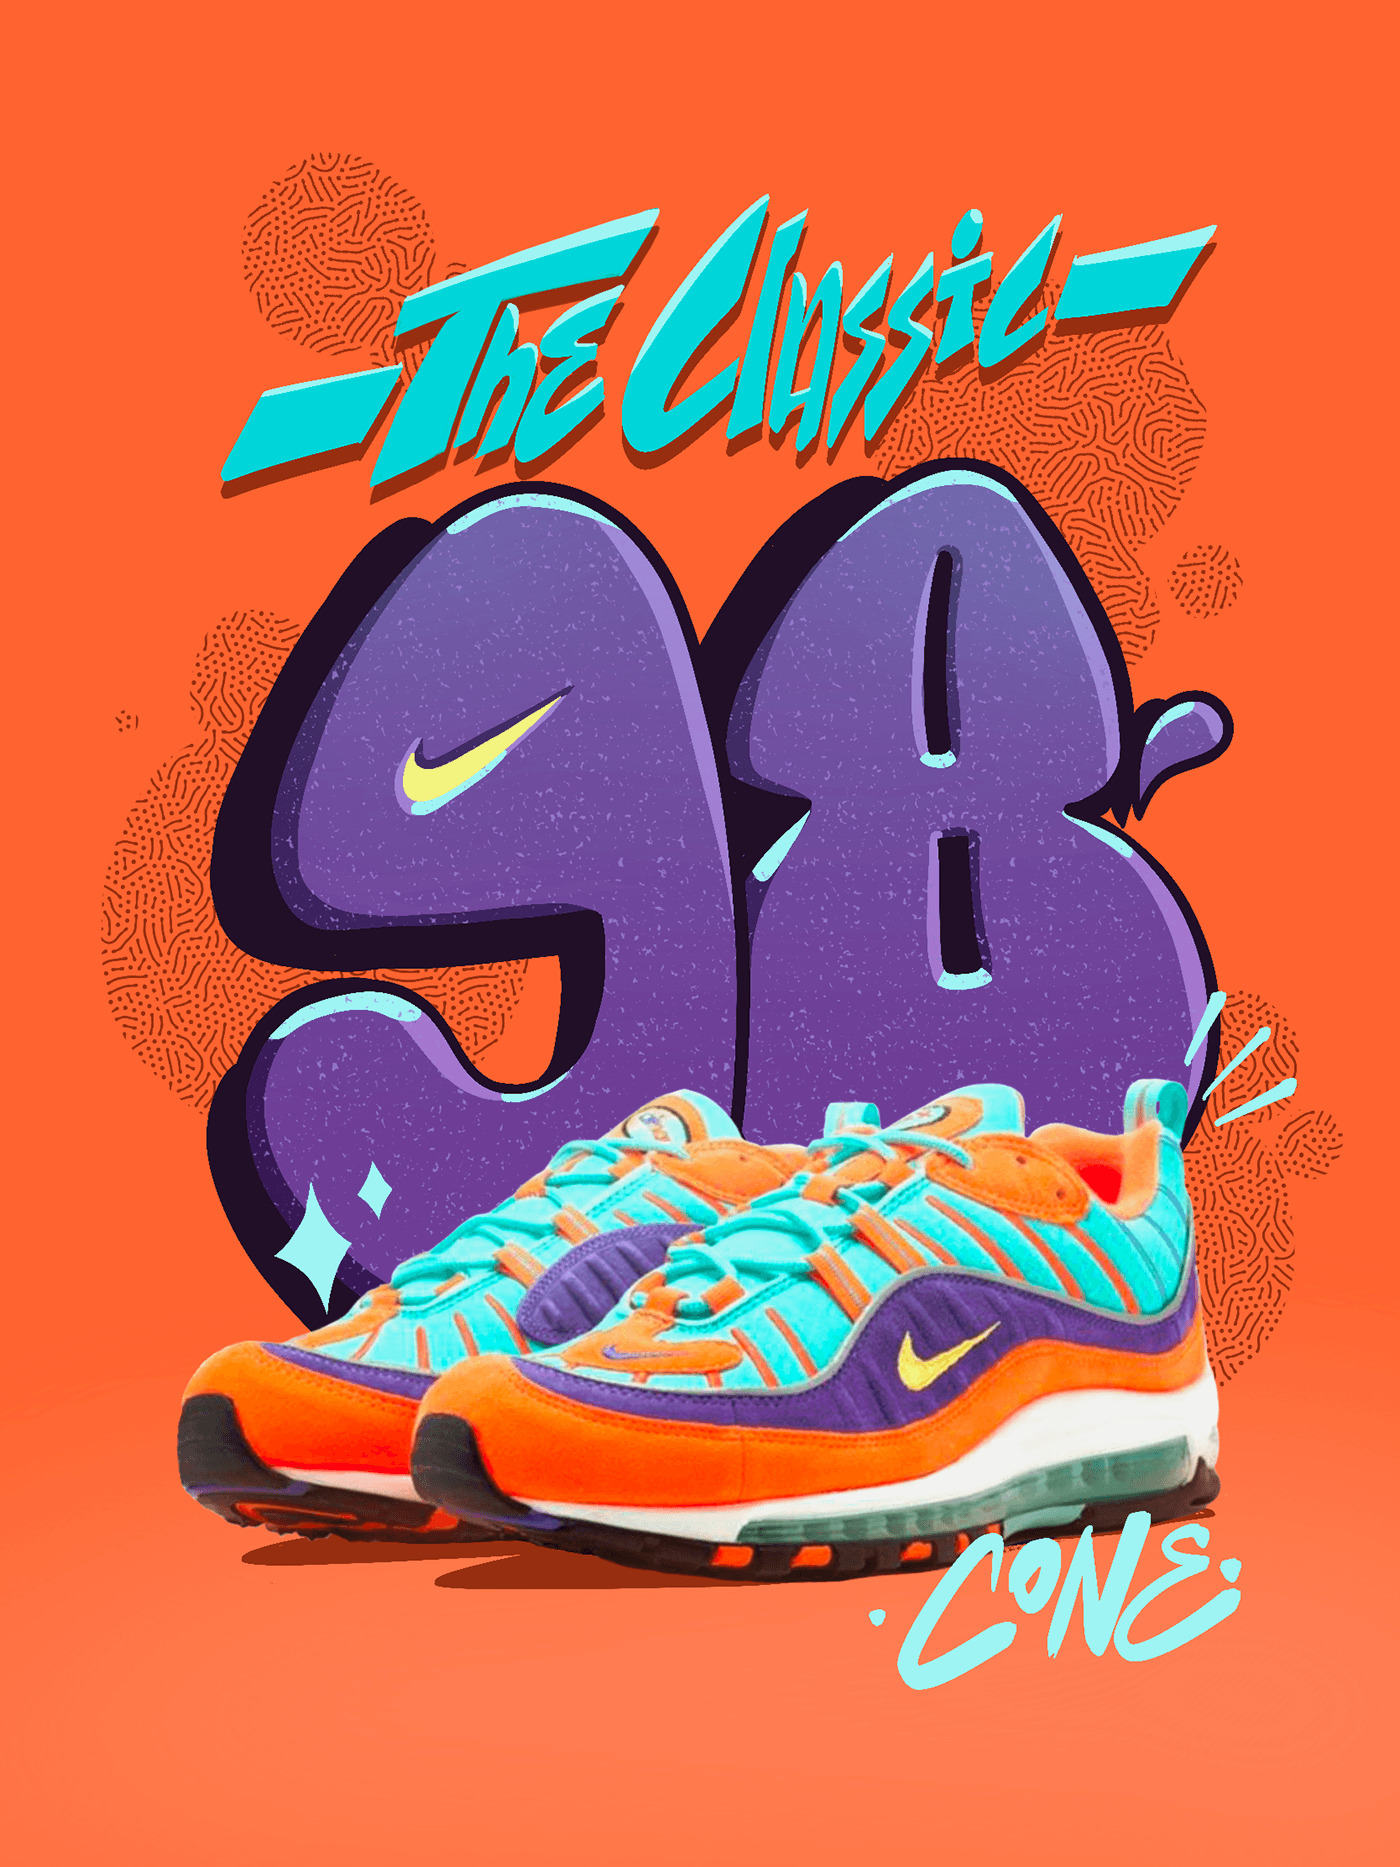 lettering airmax shoes Nike Advertising  sports Graffiti Digital Art  ILLUSTRATION  Procreate